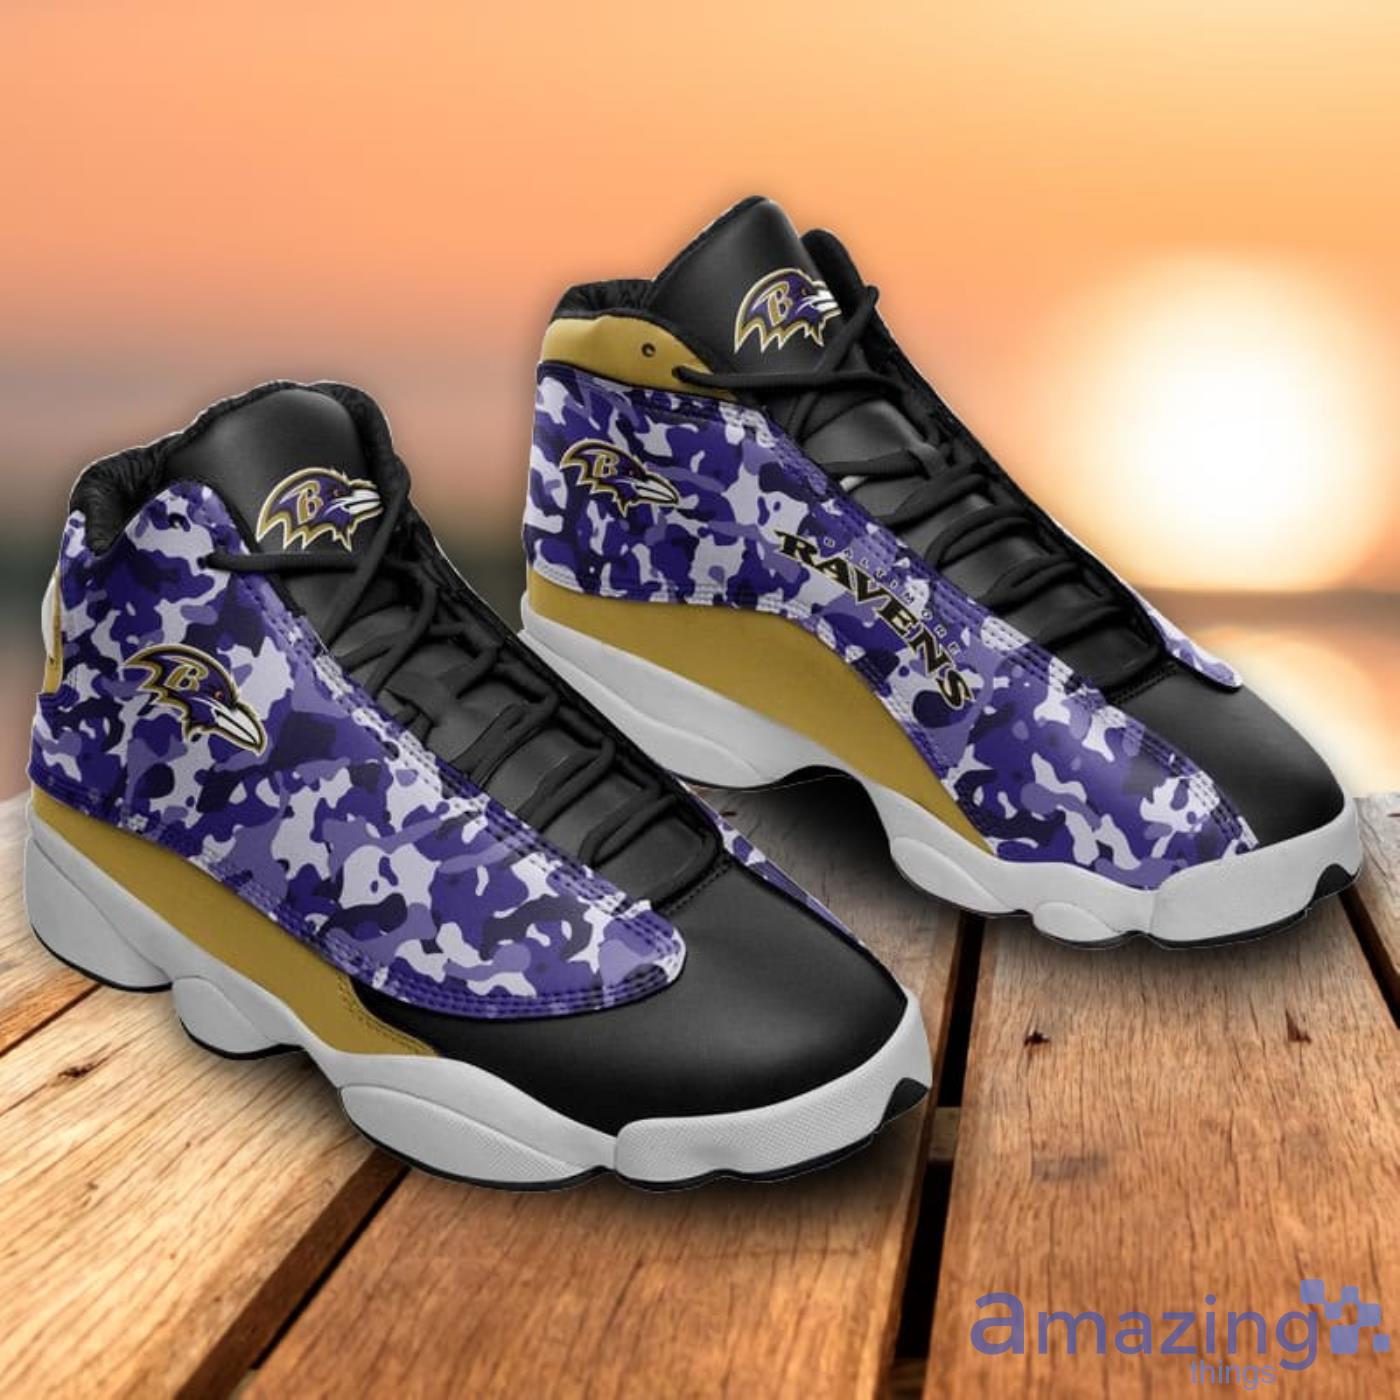 Baltimore Ravens Camo Pattern Air Jordan 13 Shoes For Fans